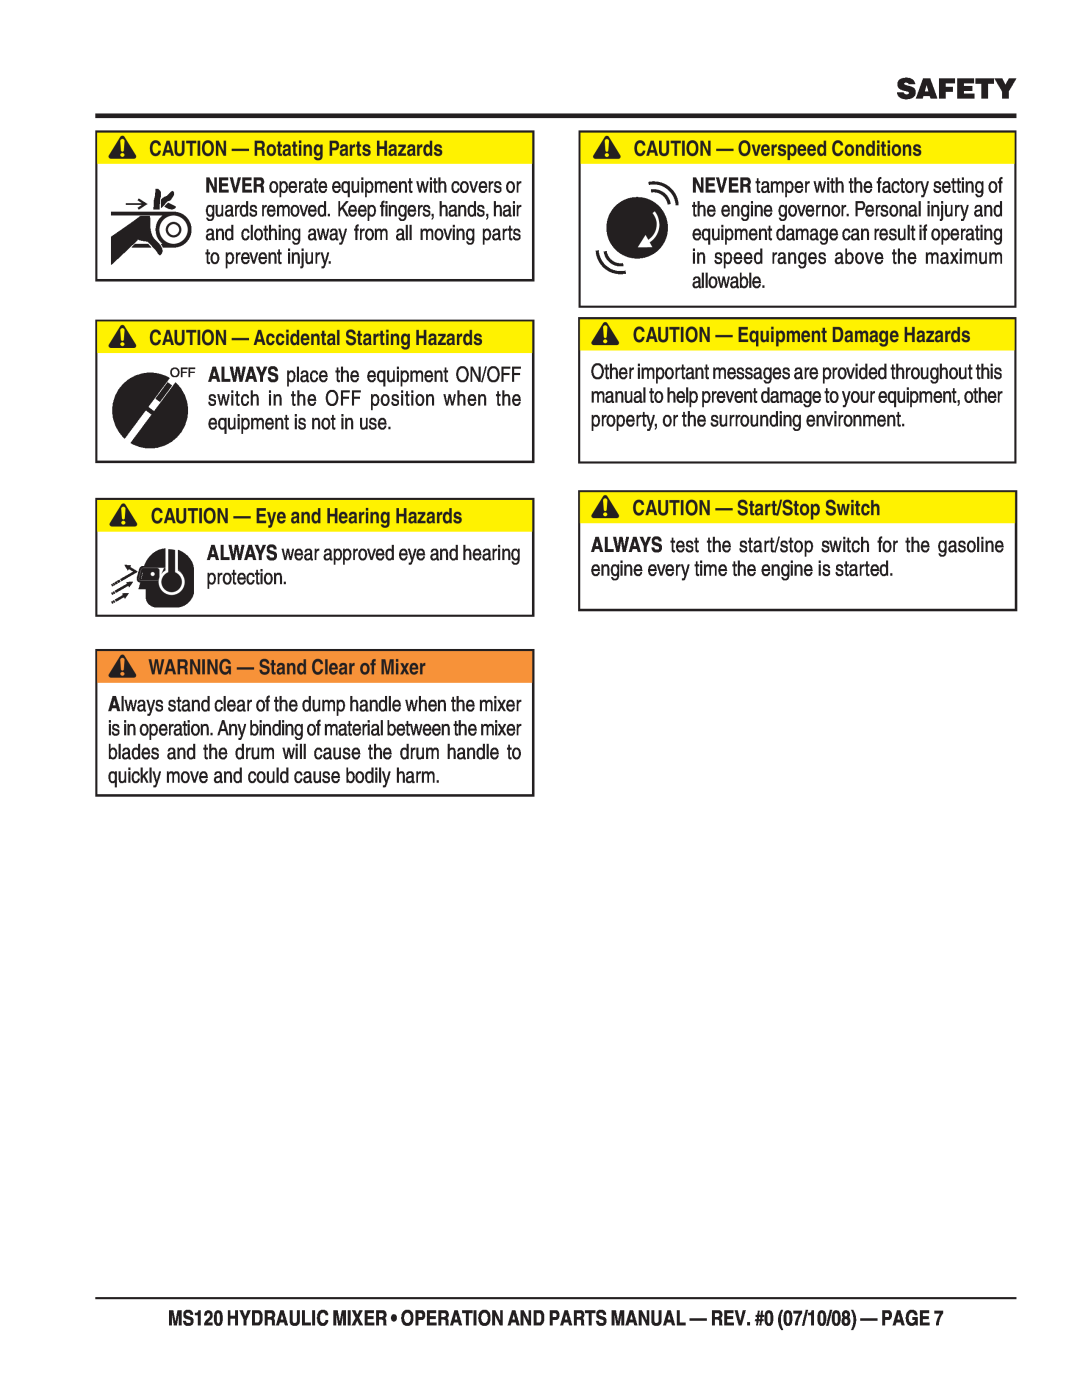 Stow MS120HD13 CAUTION - Rotating Parts Hazards, CAUTION - Accidental Starting Hazards, CAUTION - Eye and Hearing Hazards 